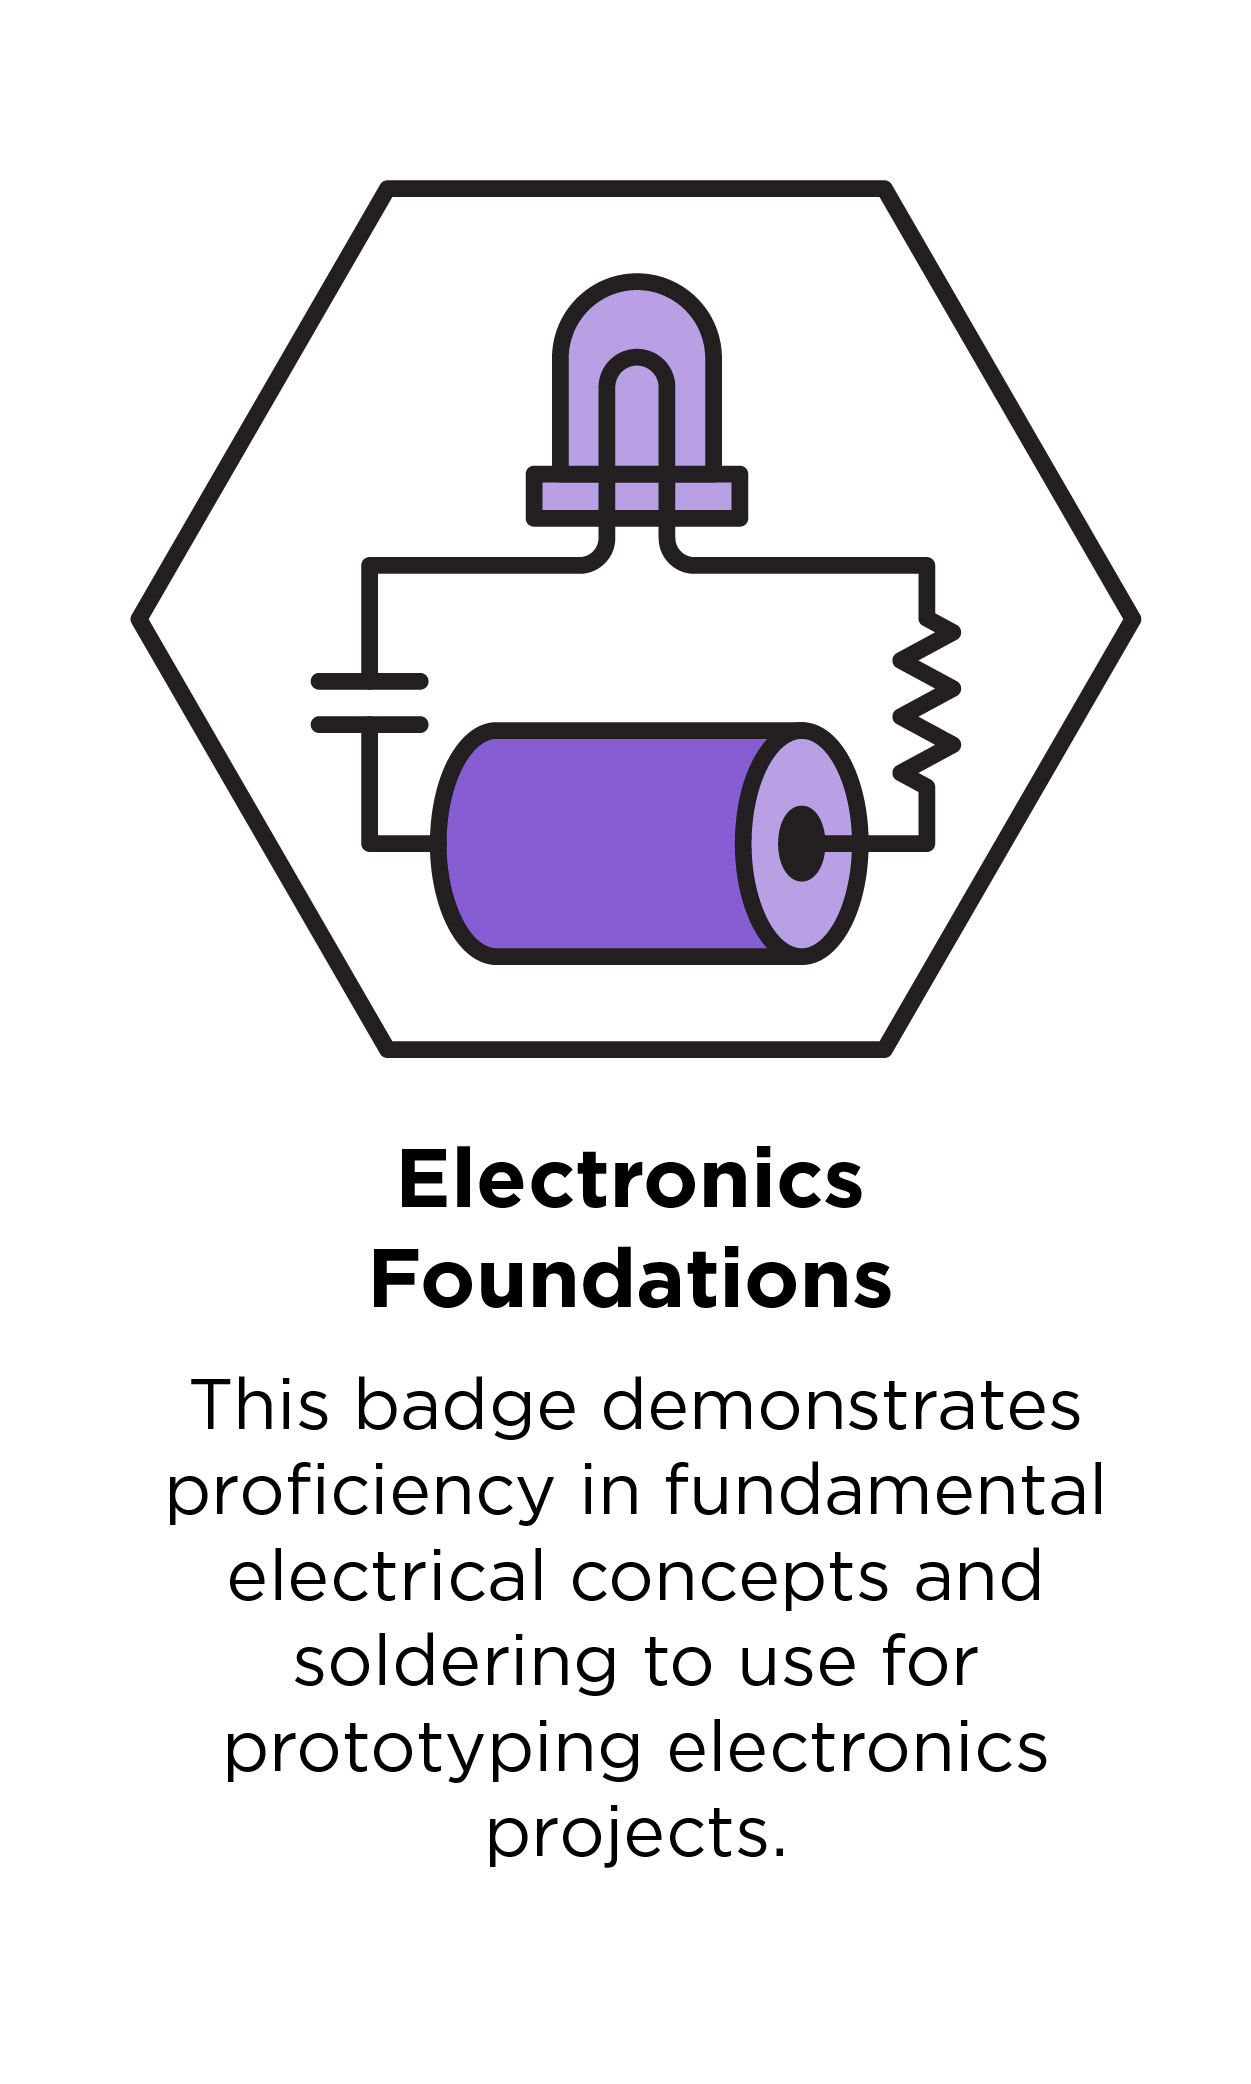 Electronic Foundations Badge